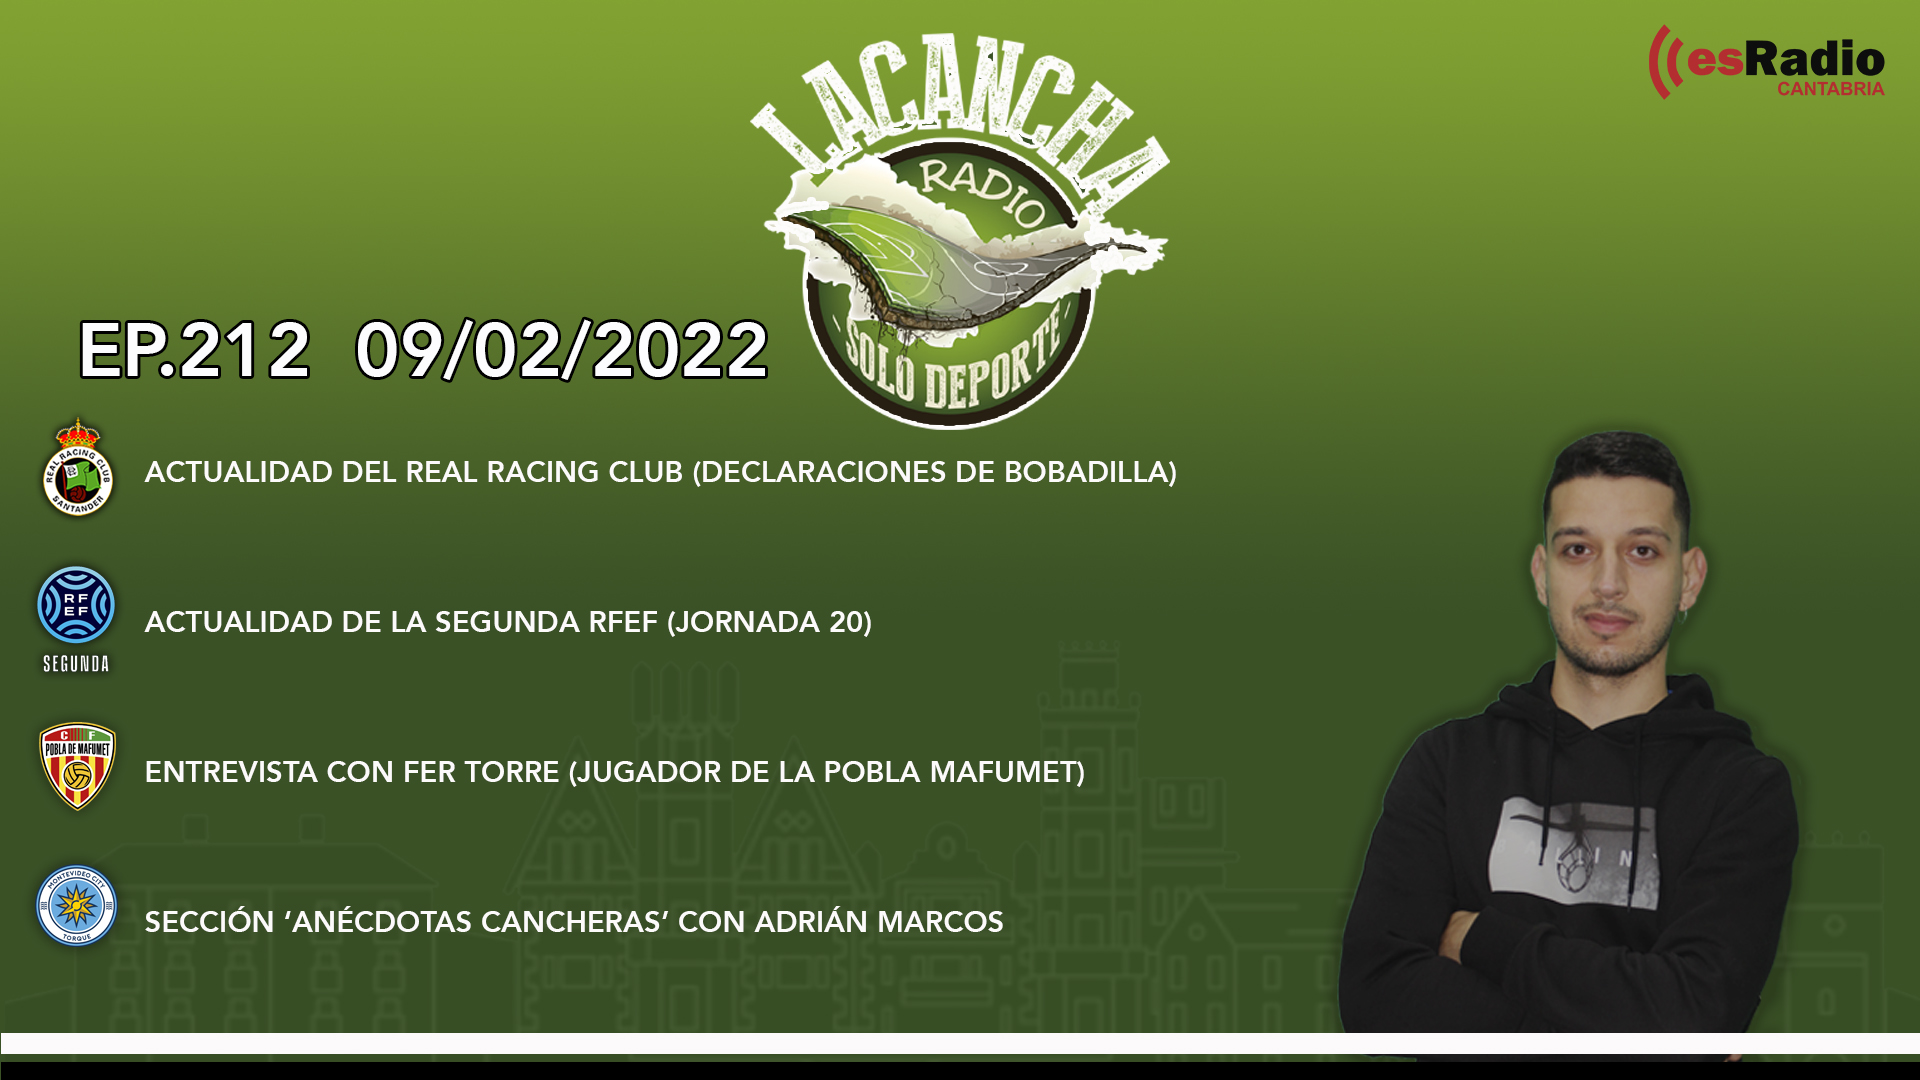 La Cancha Ep. 212 (09/02/2022)